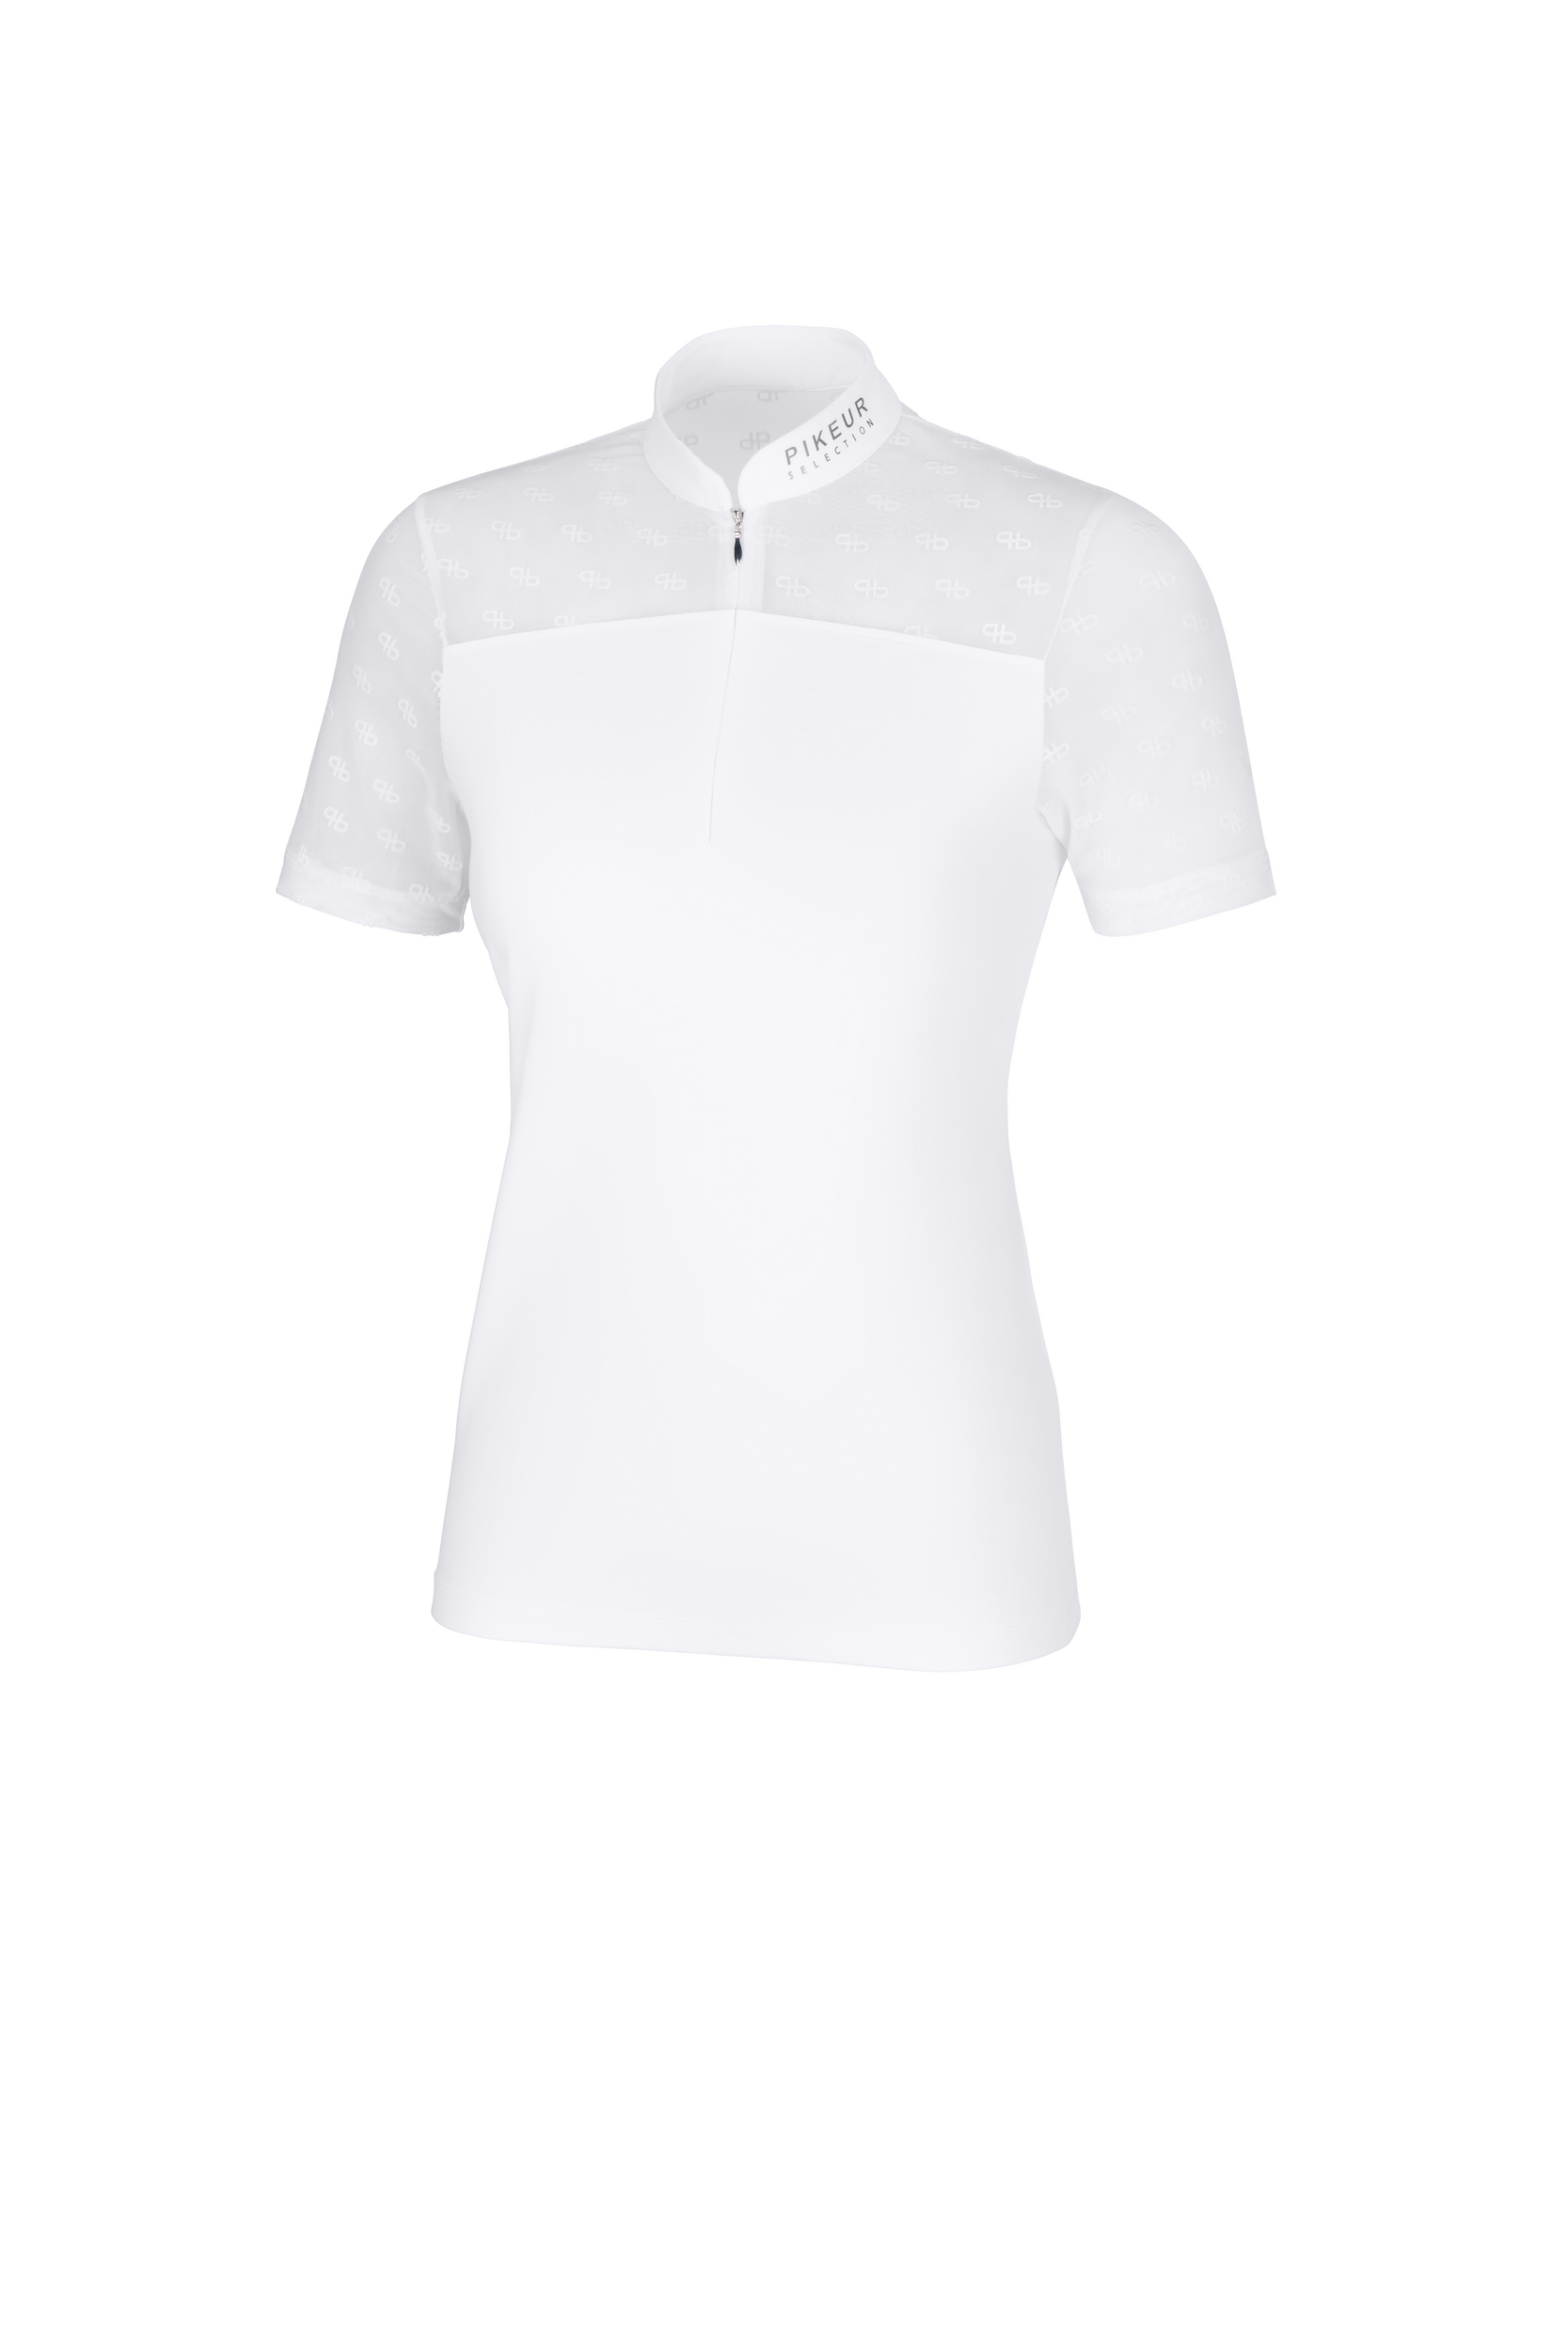 PIKEUR Damen Trainings Zip Shirt Kurzarm Selection FS24 - white - 32 - 2